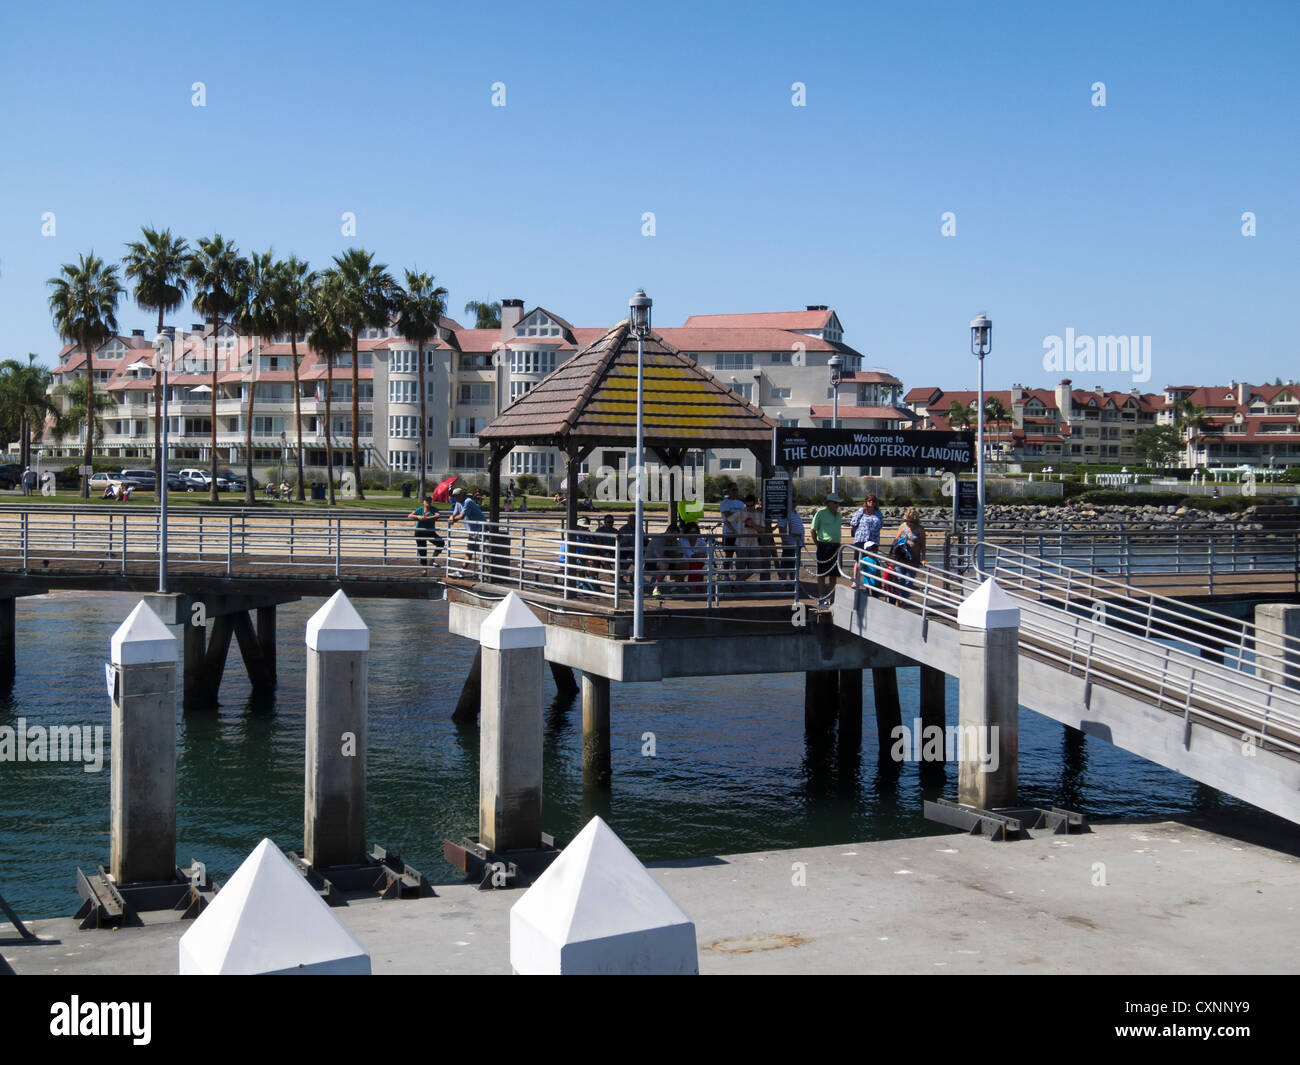 Coronado Island Ferry Pier, San Diego, CA Banque D'Images